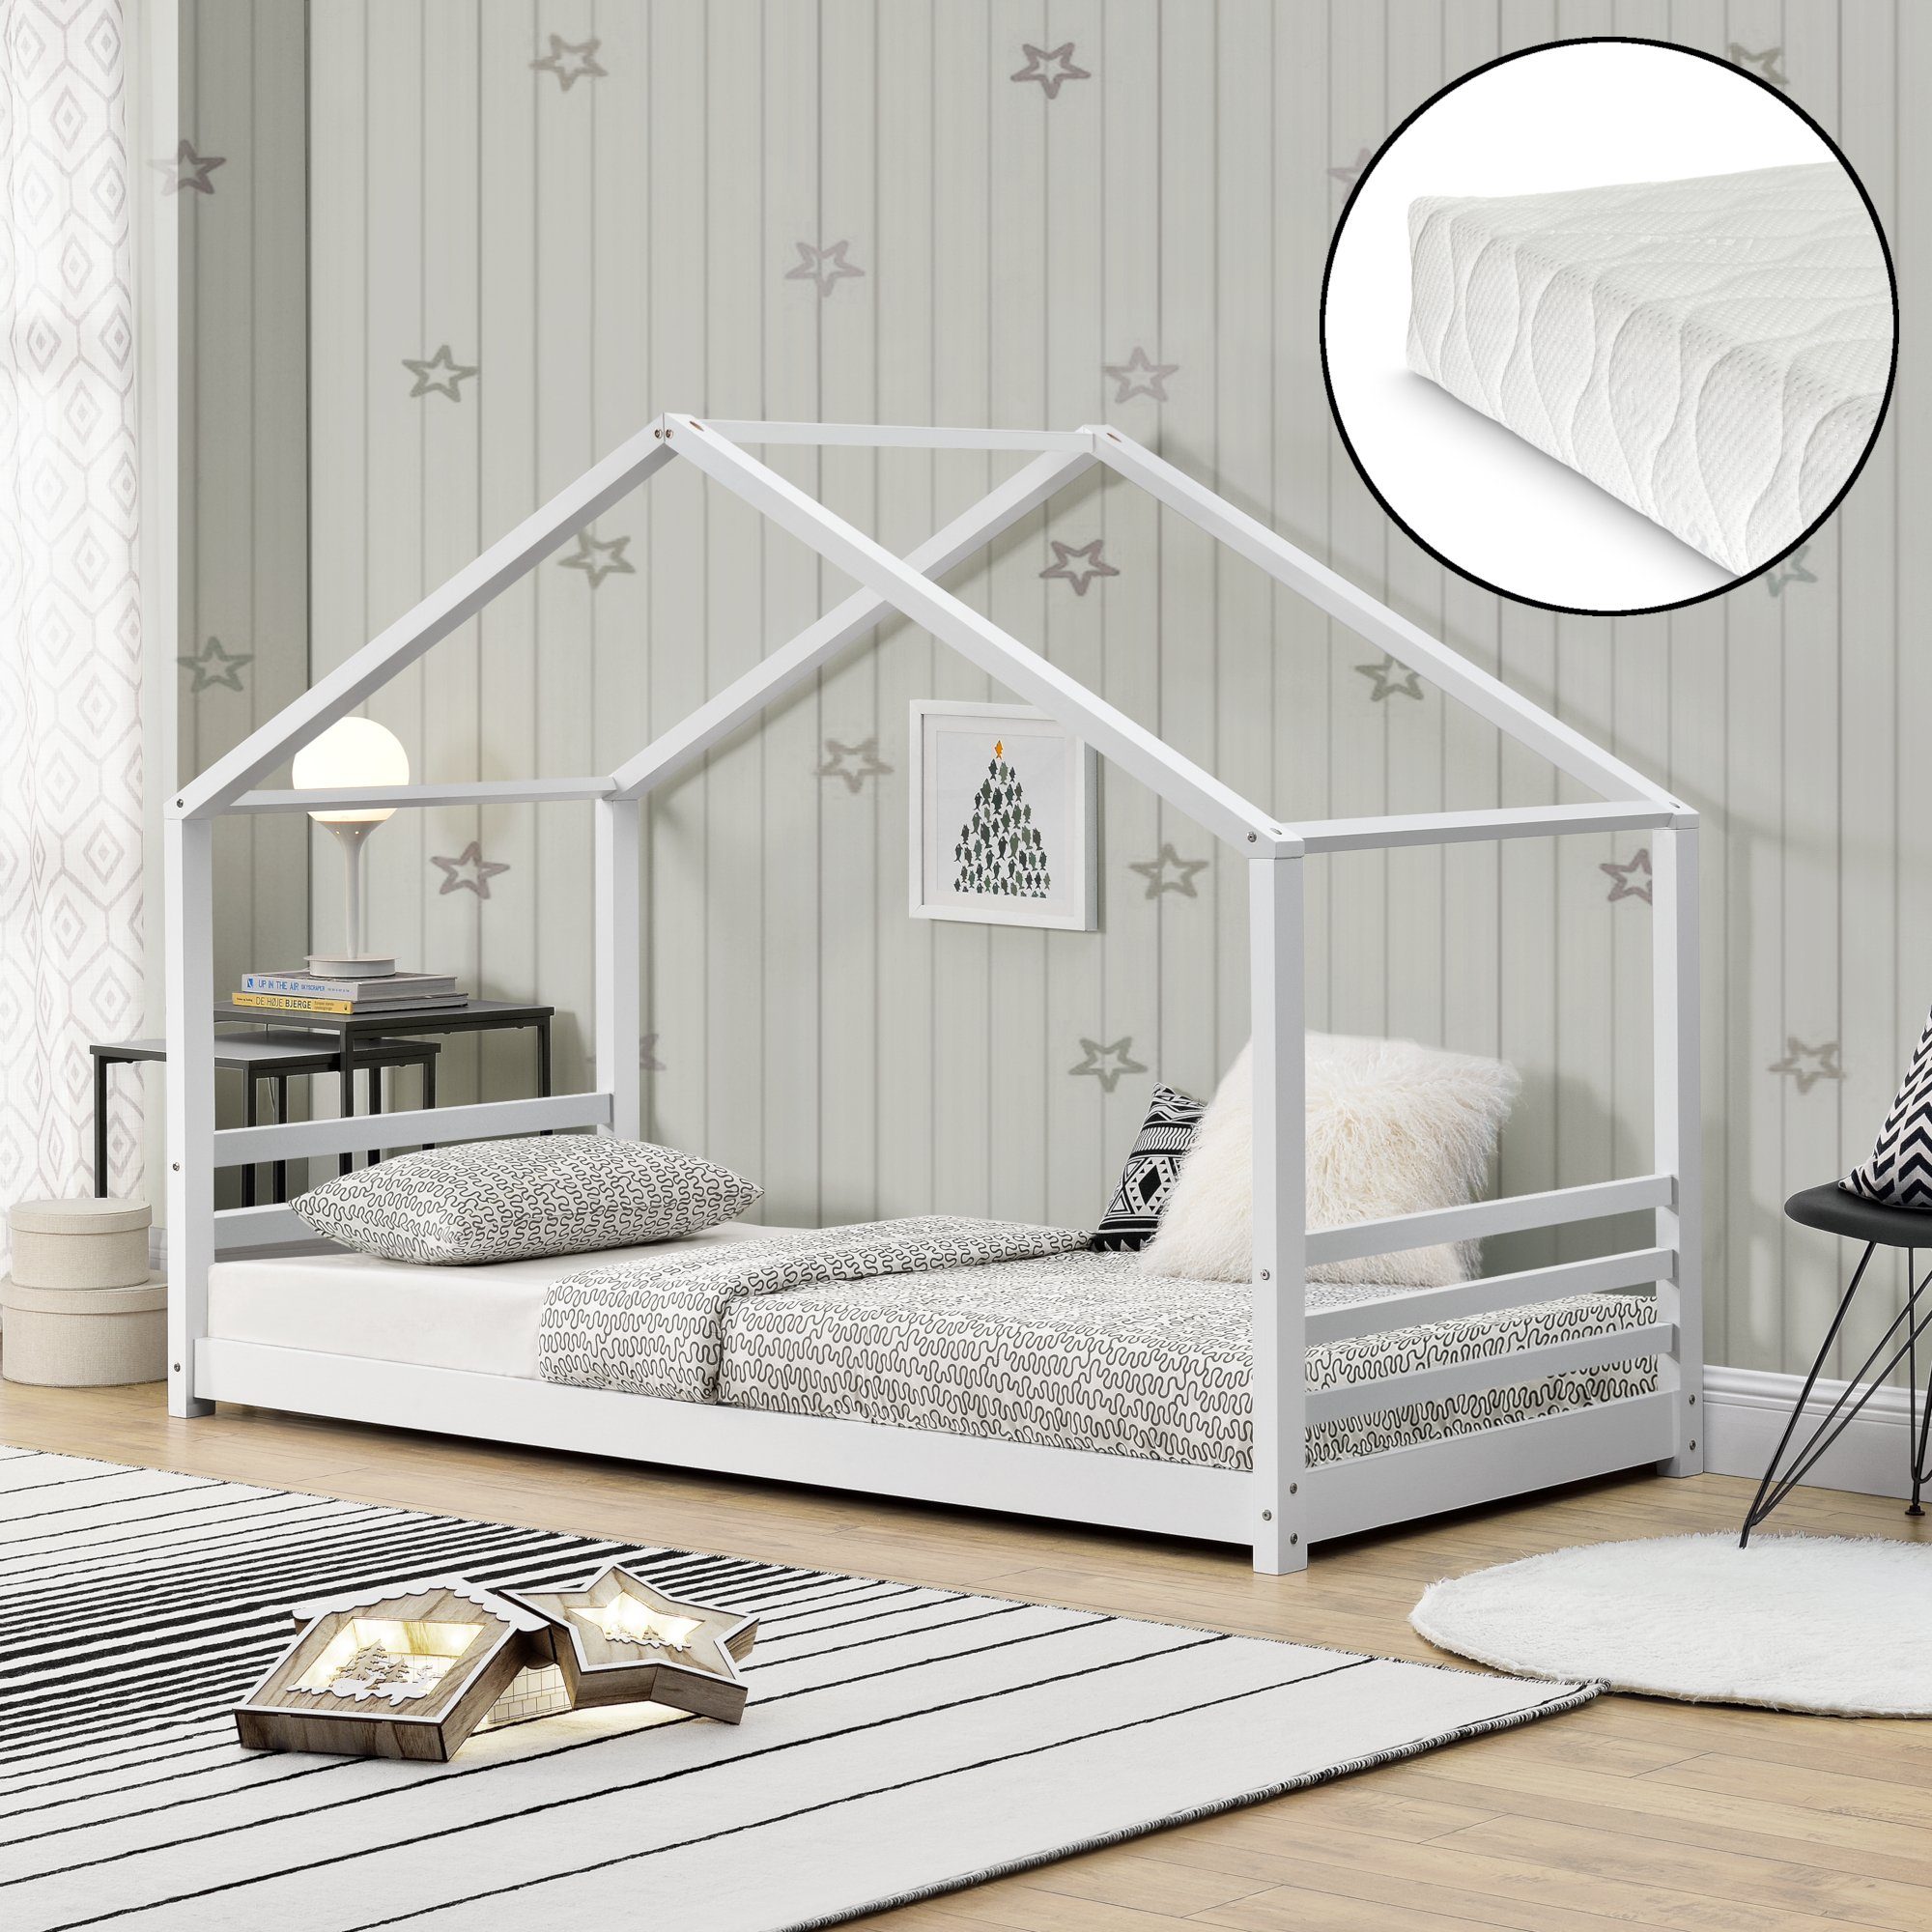 Matratze mit Rausfallschutz 90x200cm Haus Holz Weiß Bettenhaus Bett Kinderbett 